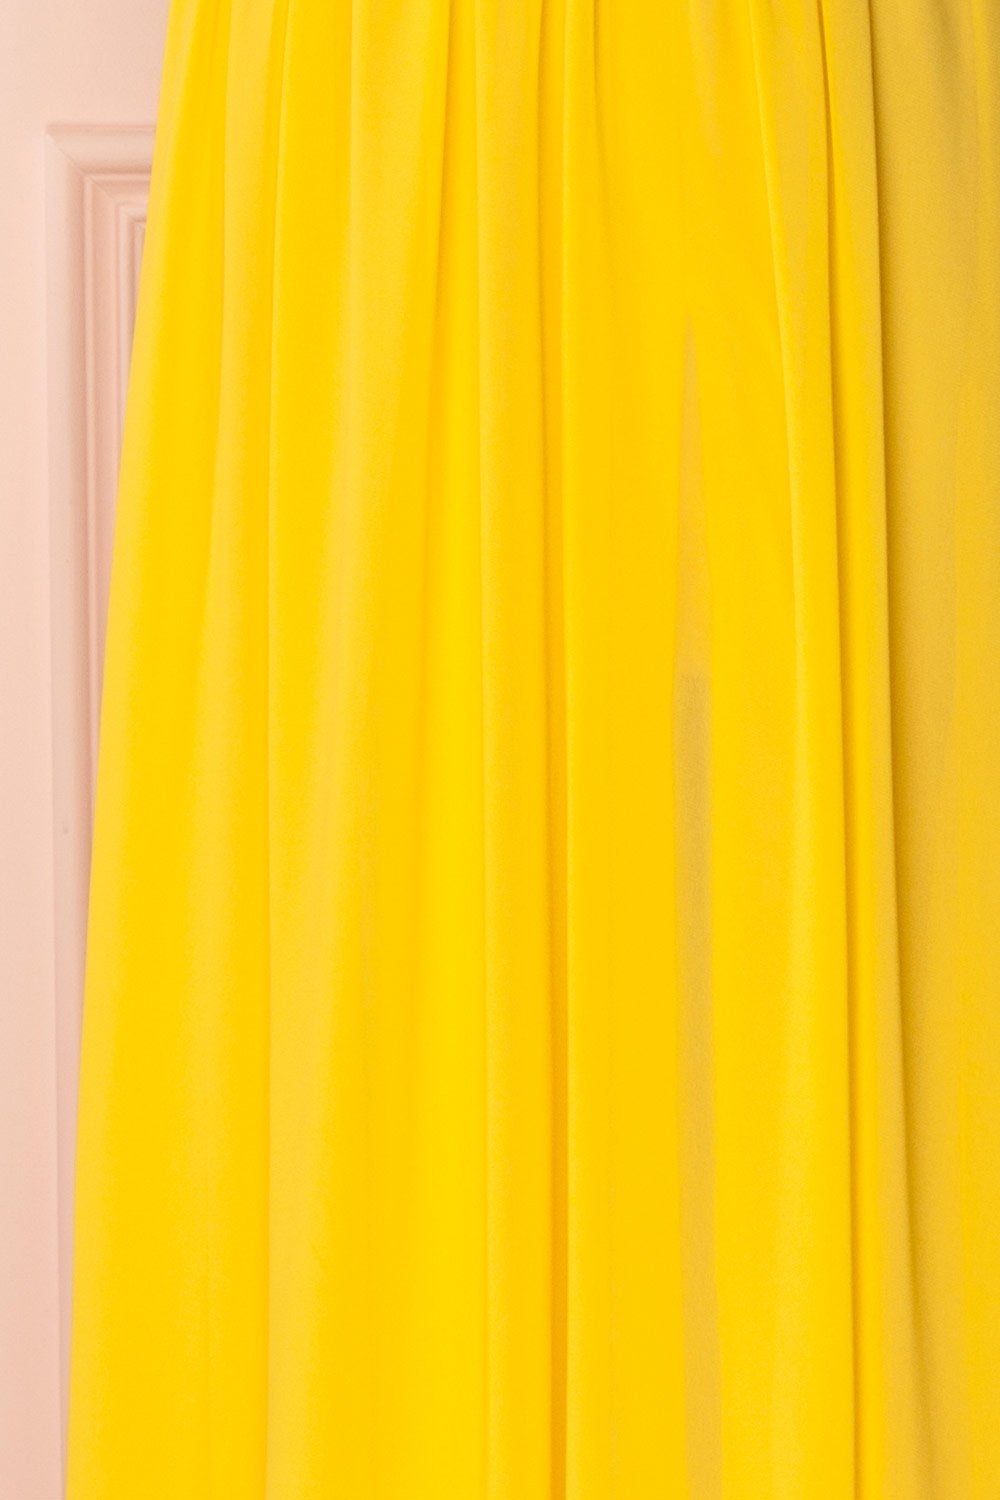 Haley Yellow | Deep V-Neck Chiffon Maxi Dress